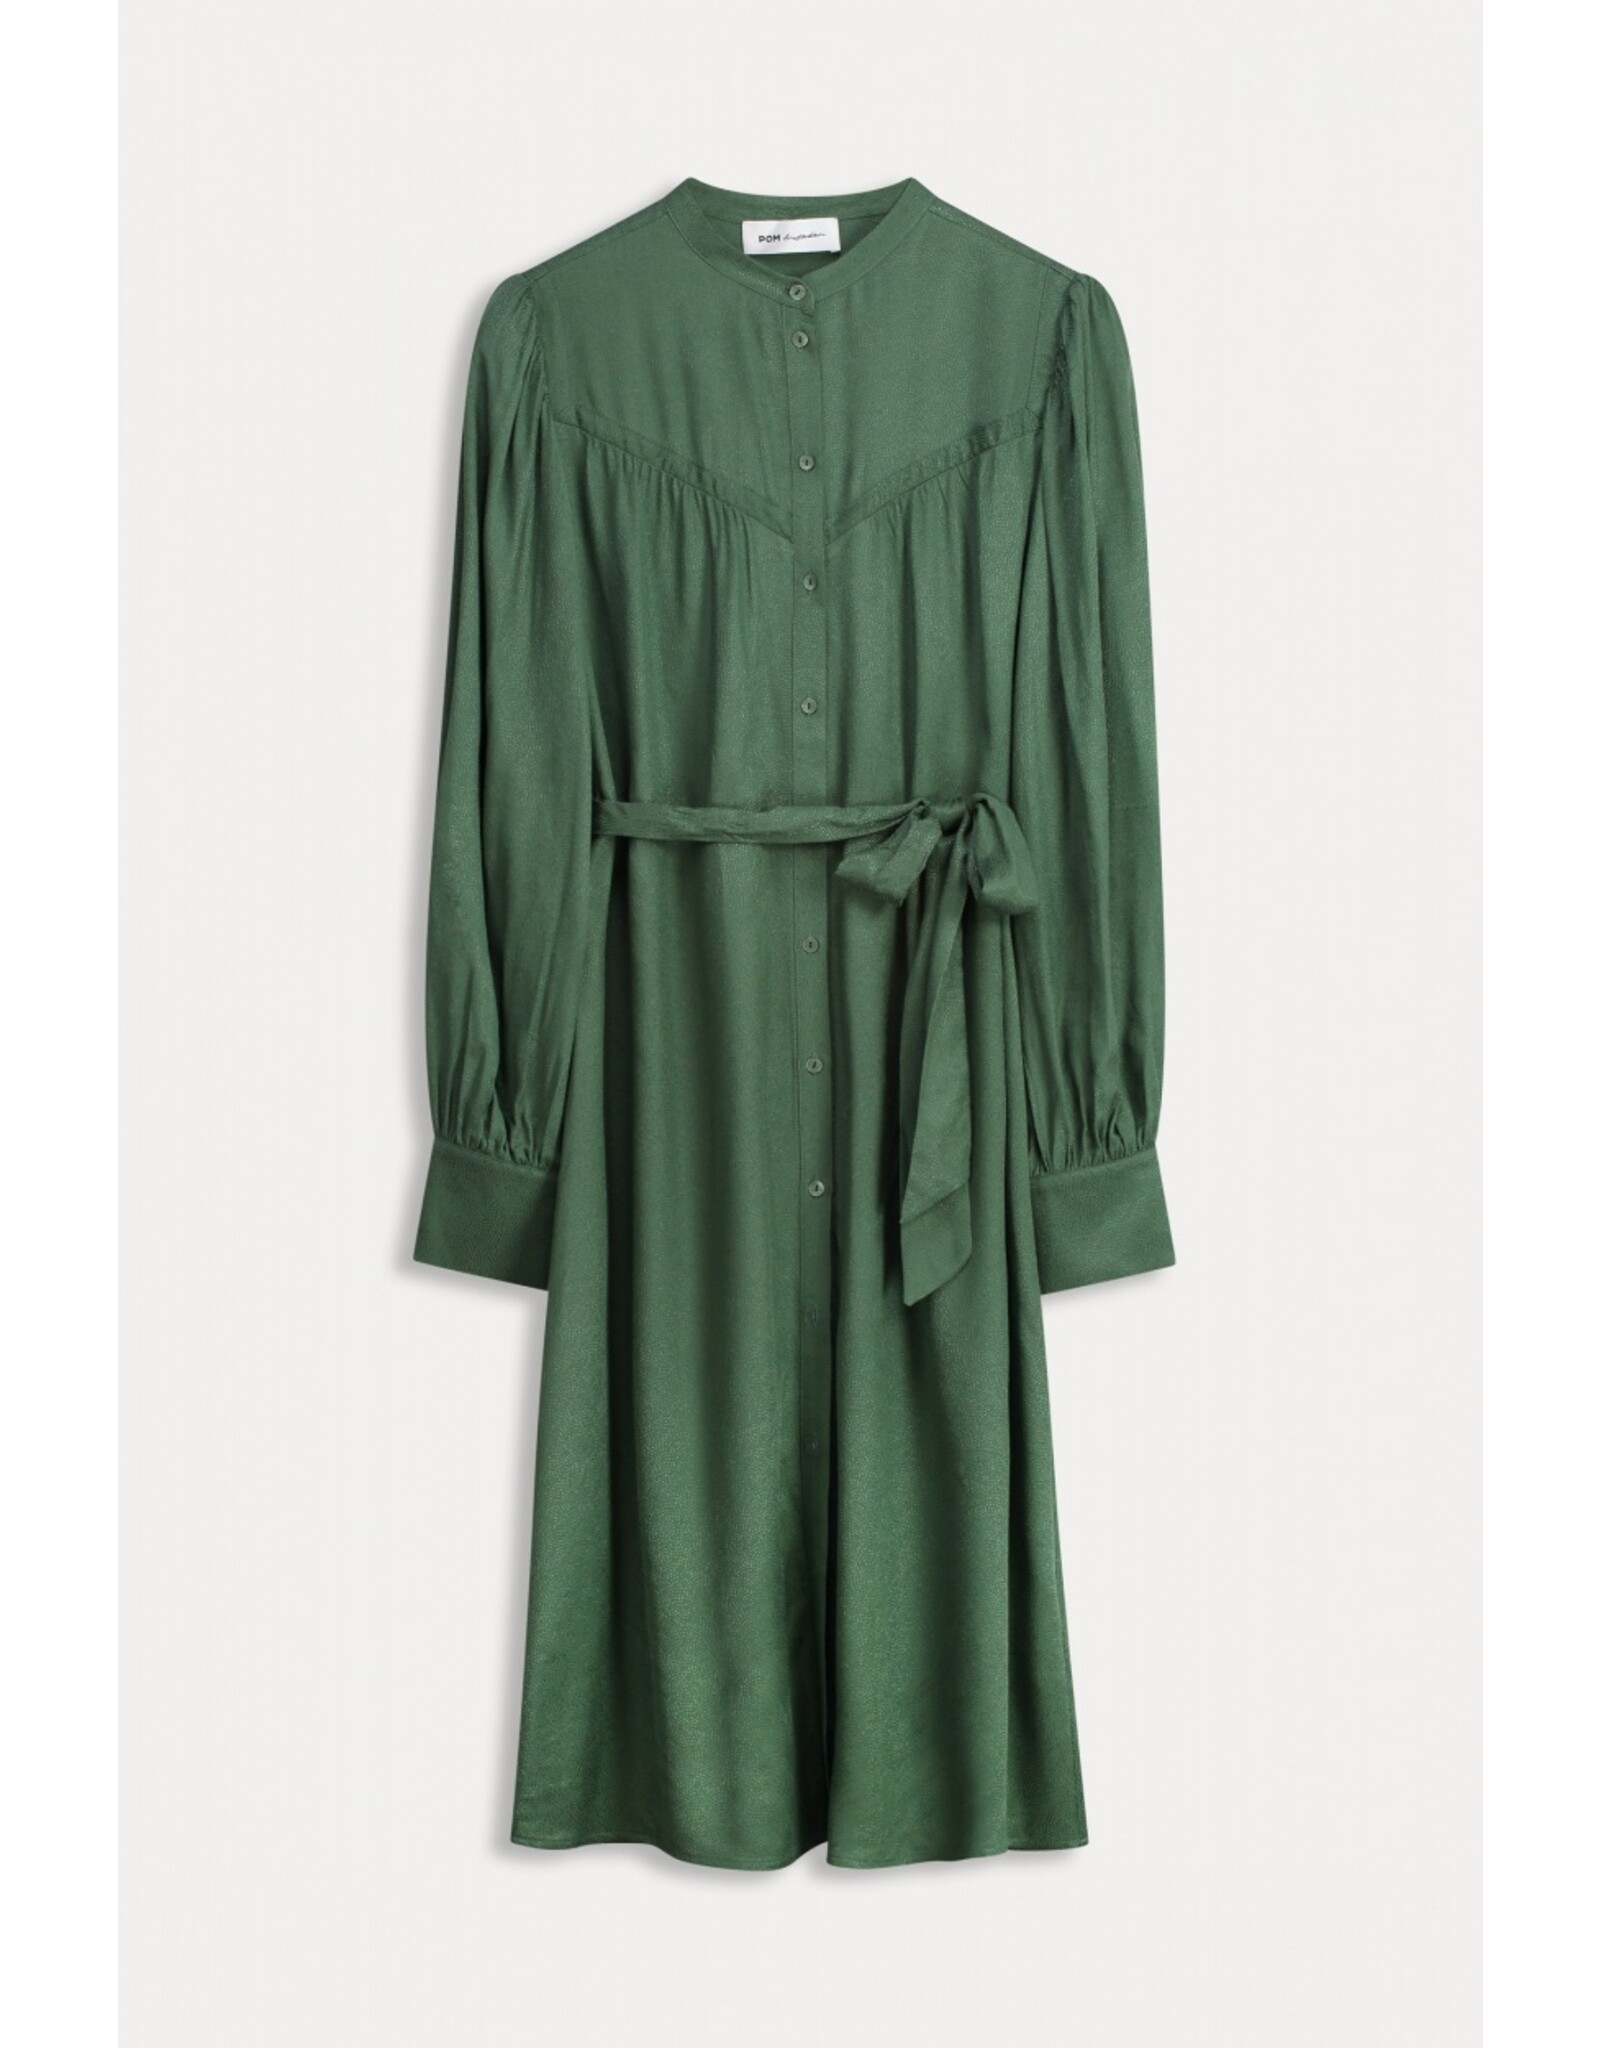 Pom Amsterdam Dress - Mythical Green